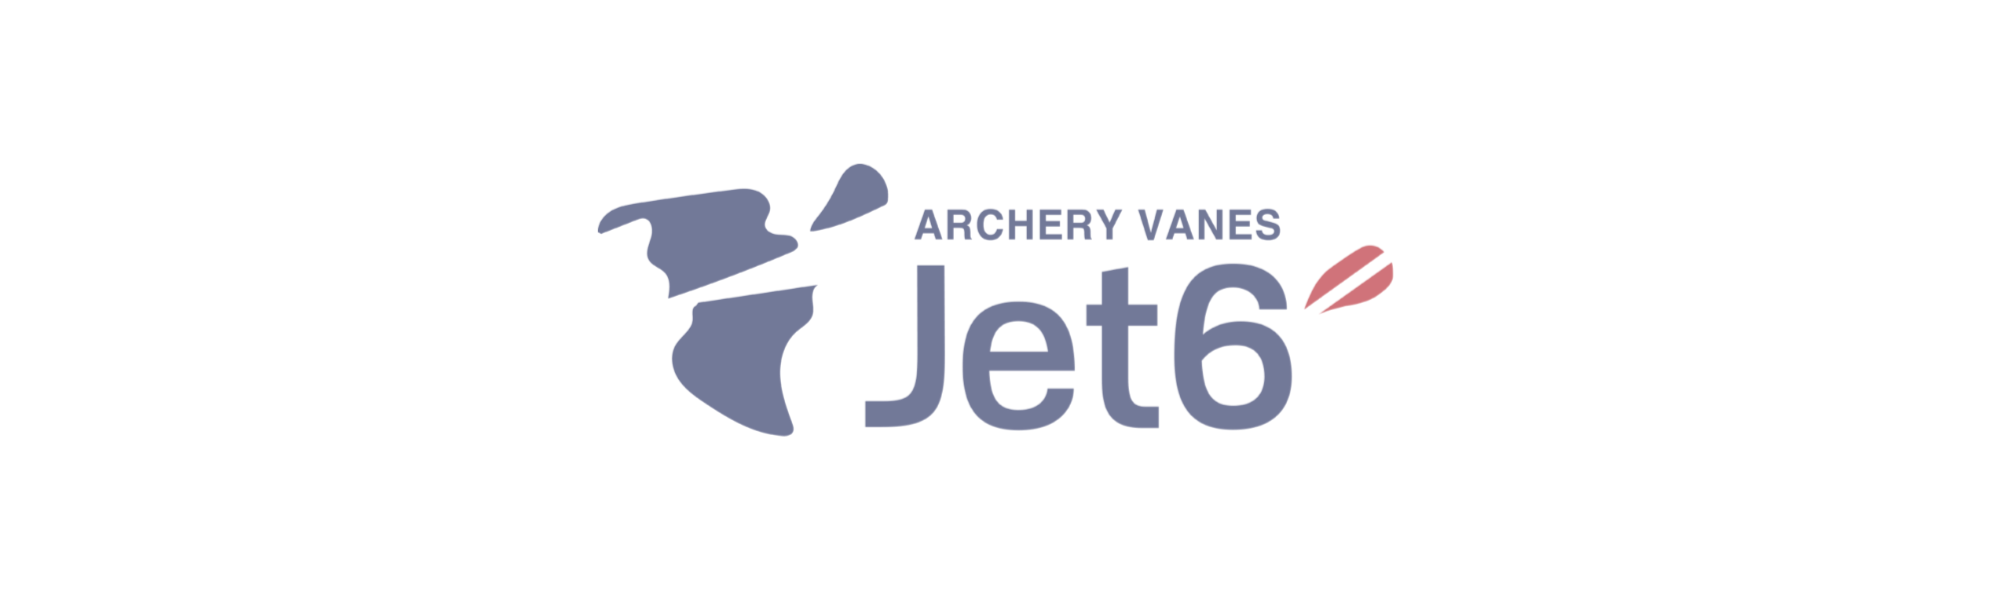 Jet6 Archery Brand Logo 